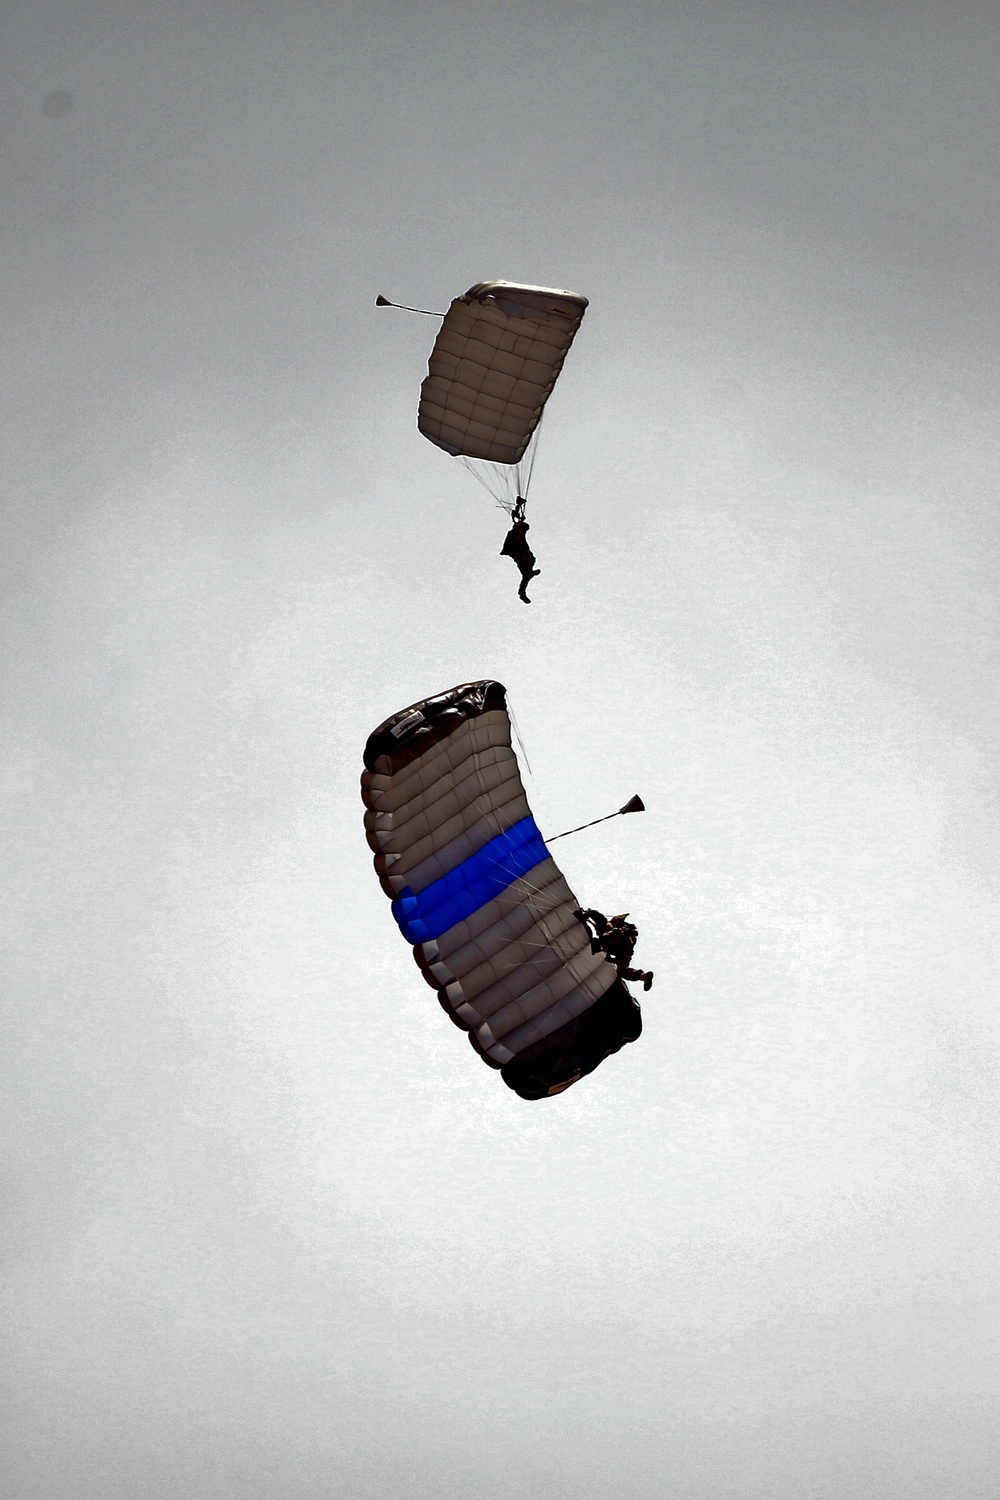 Air Force pararescuemen jump during Balikatan